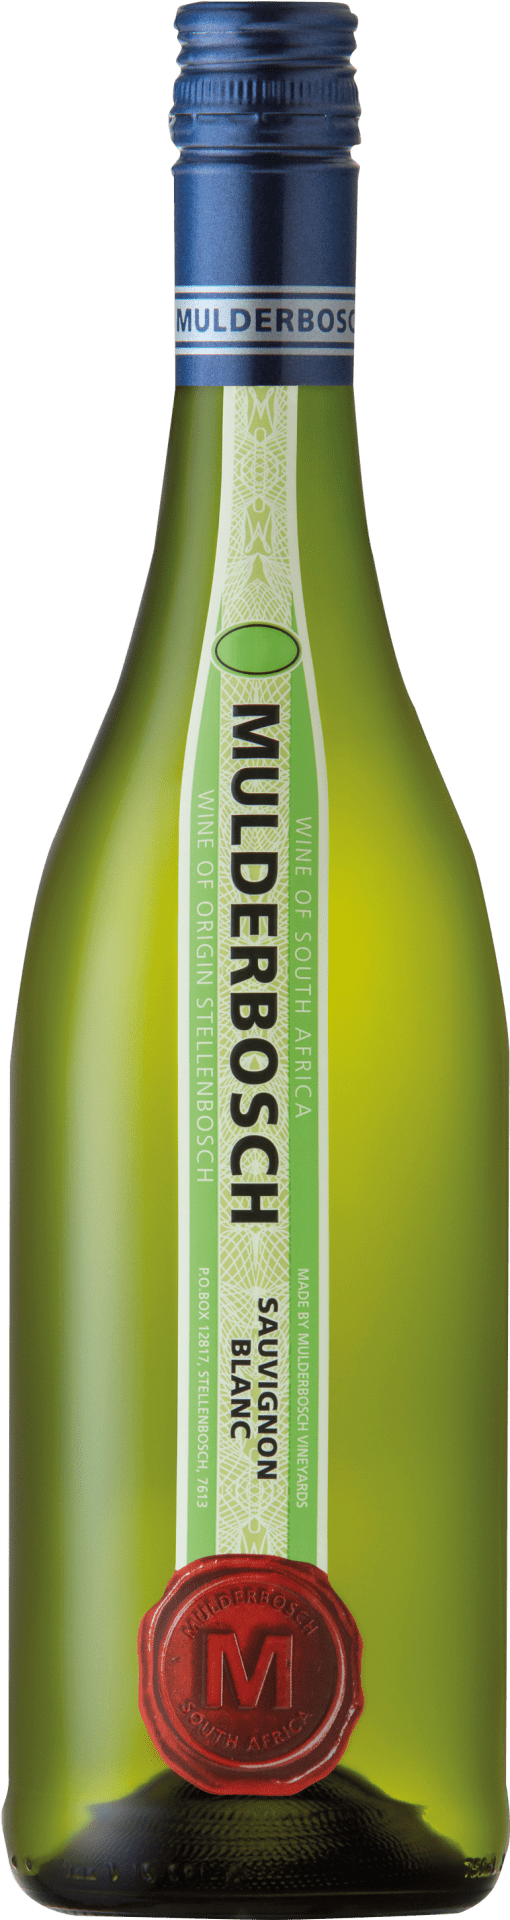 Mulderbosch Sauvignon Blanc